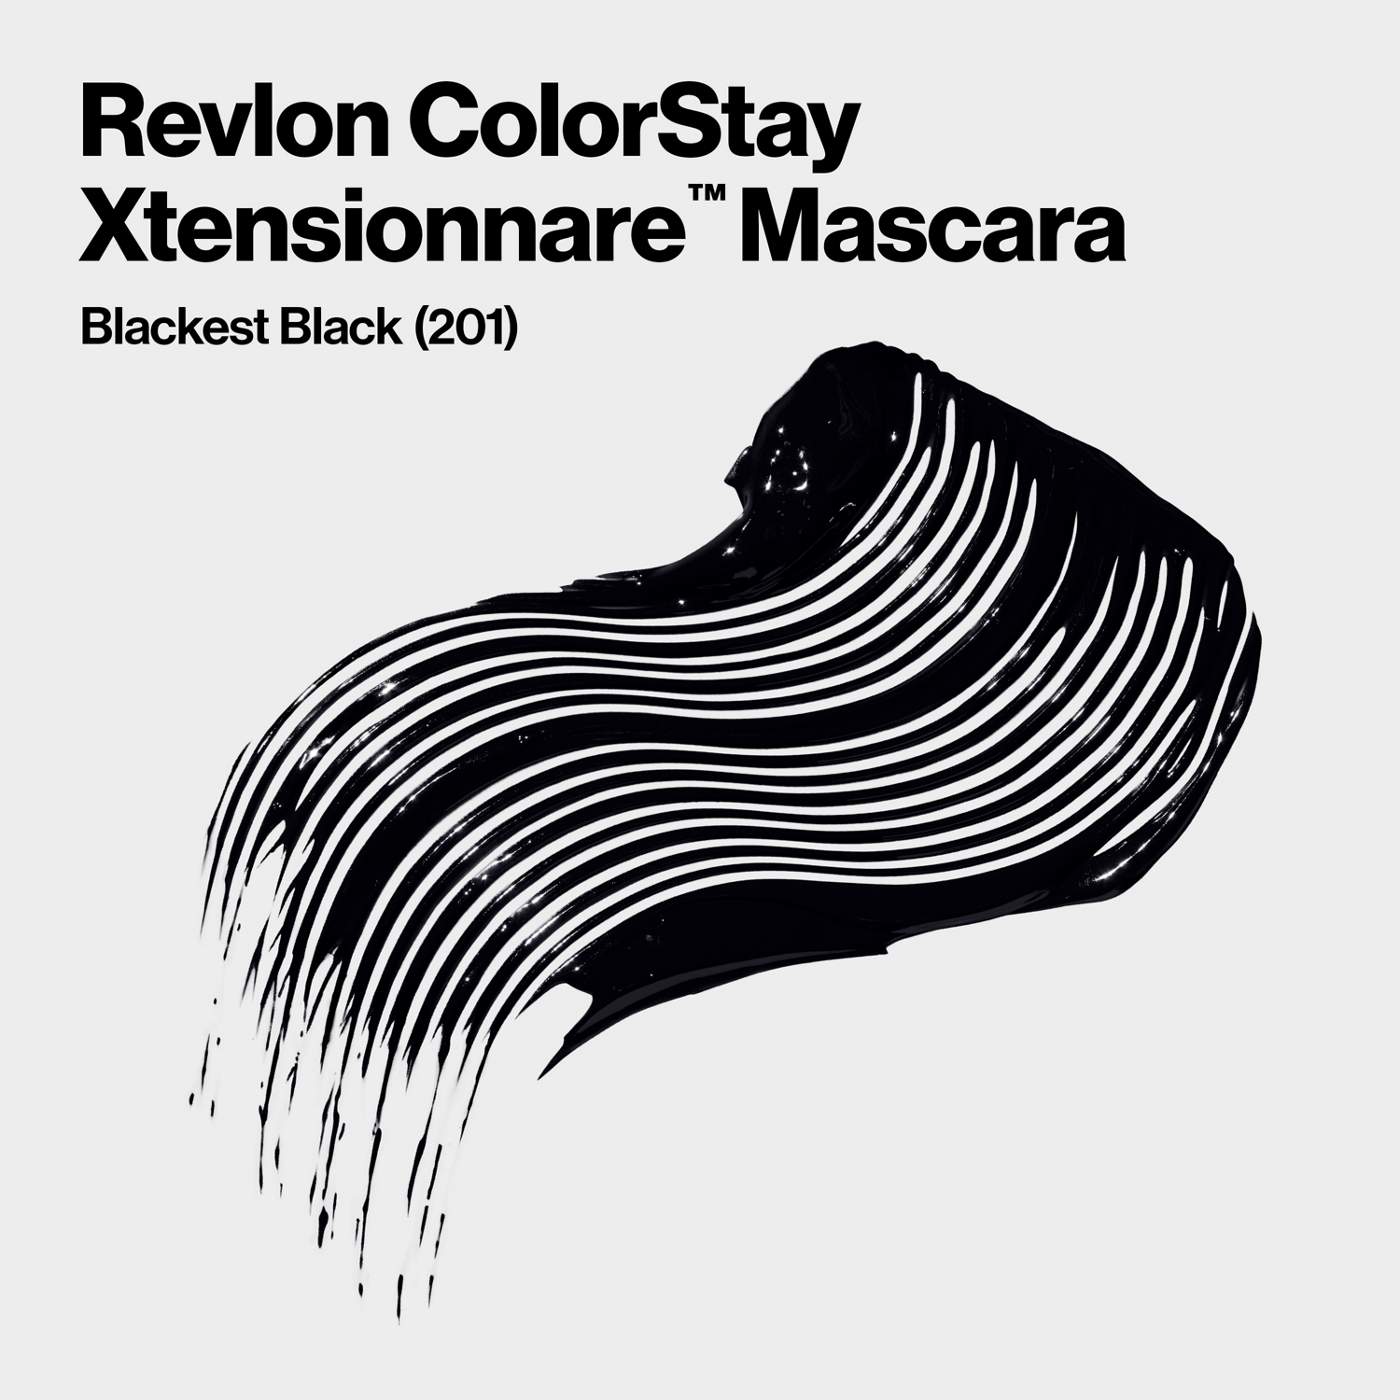 Revlon ColorStay Xtensionnaire Mascara - Blackest Black; image 5 of 6